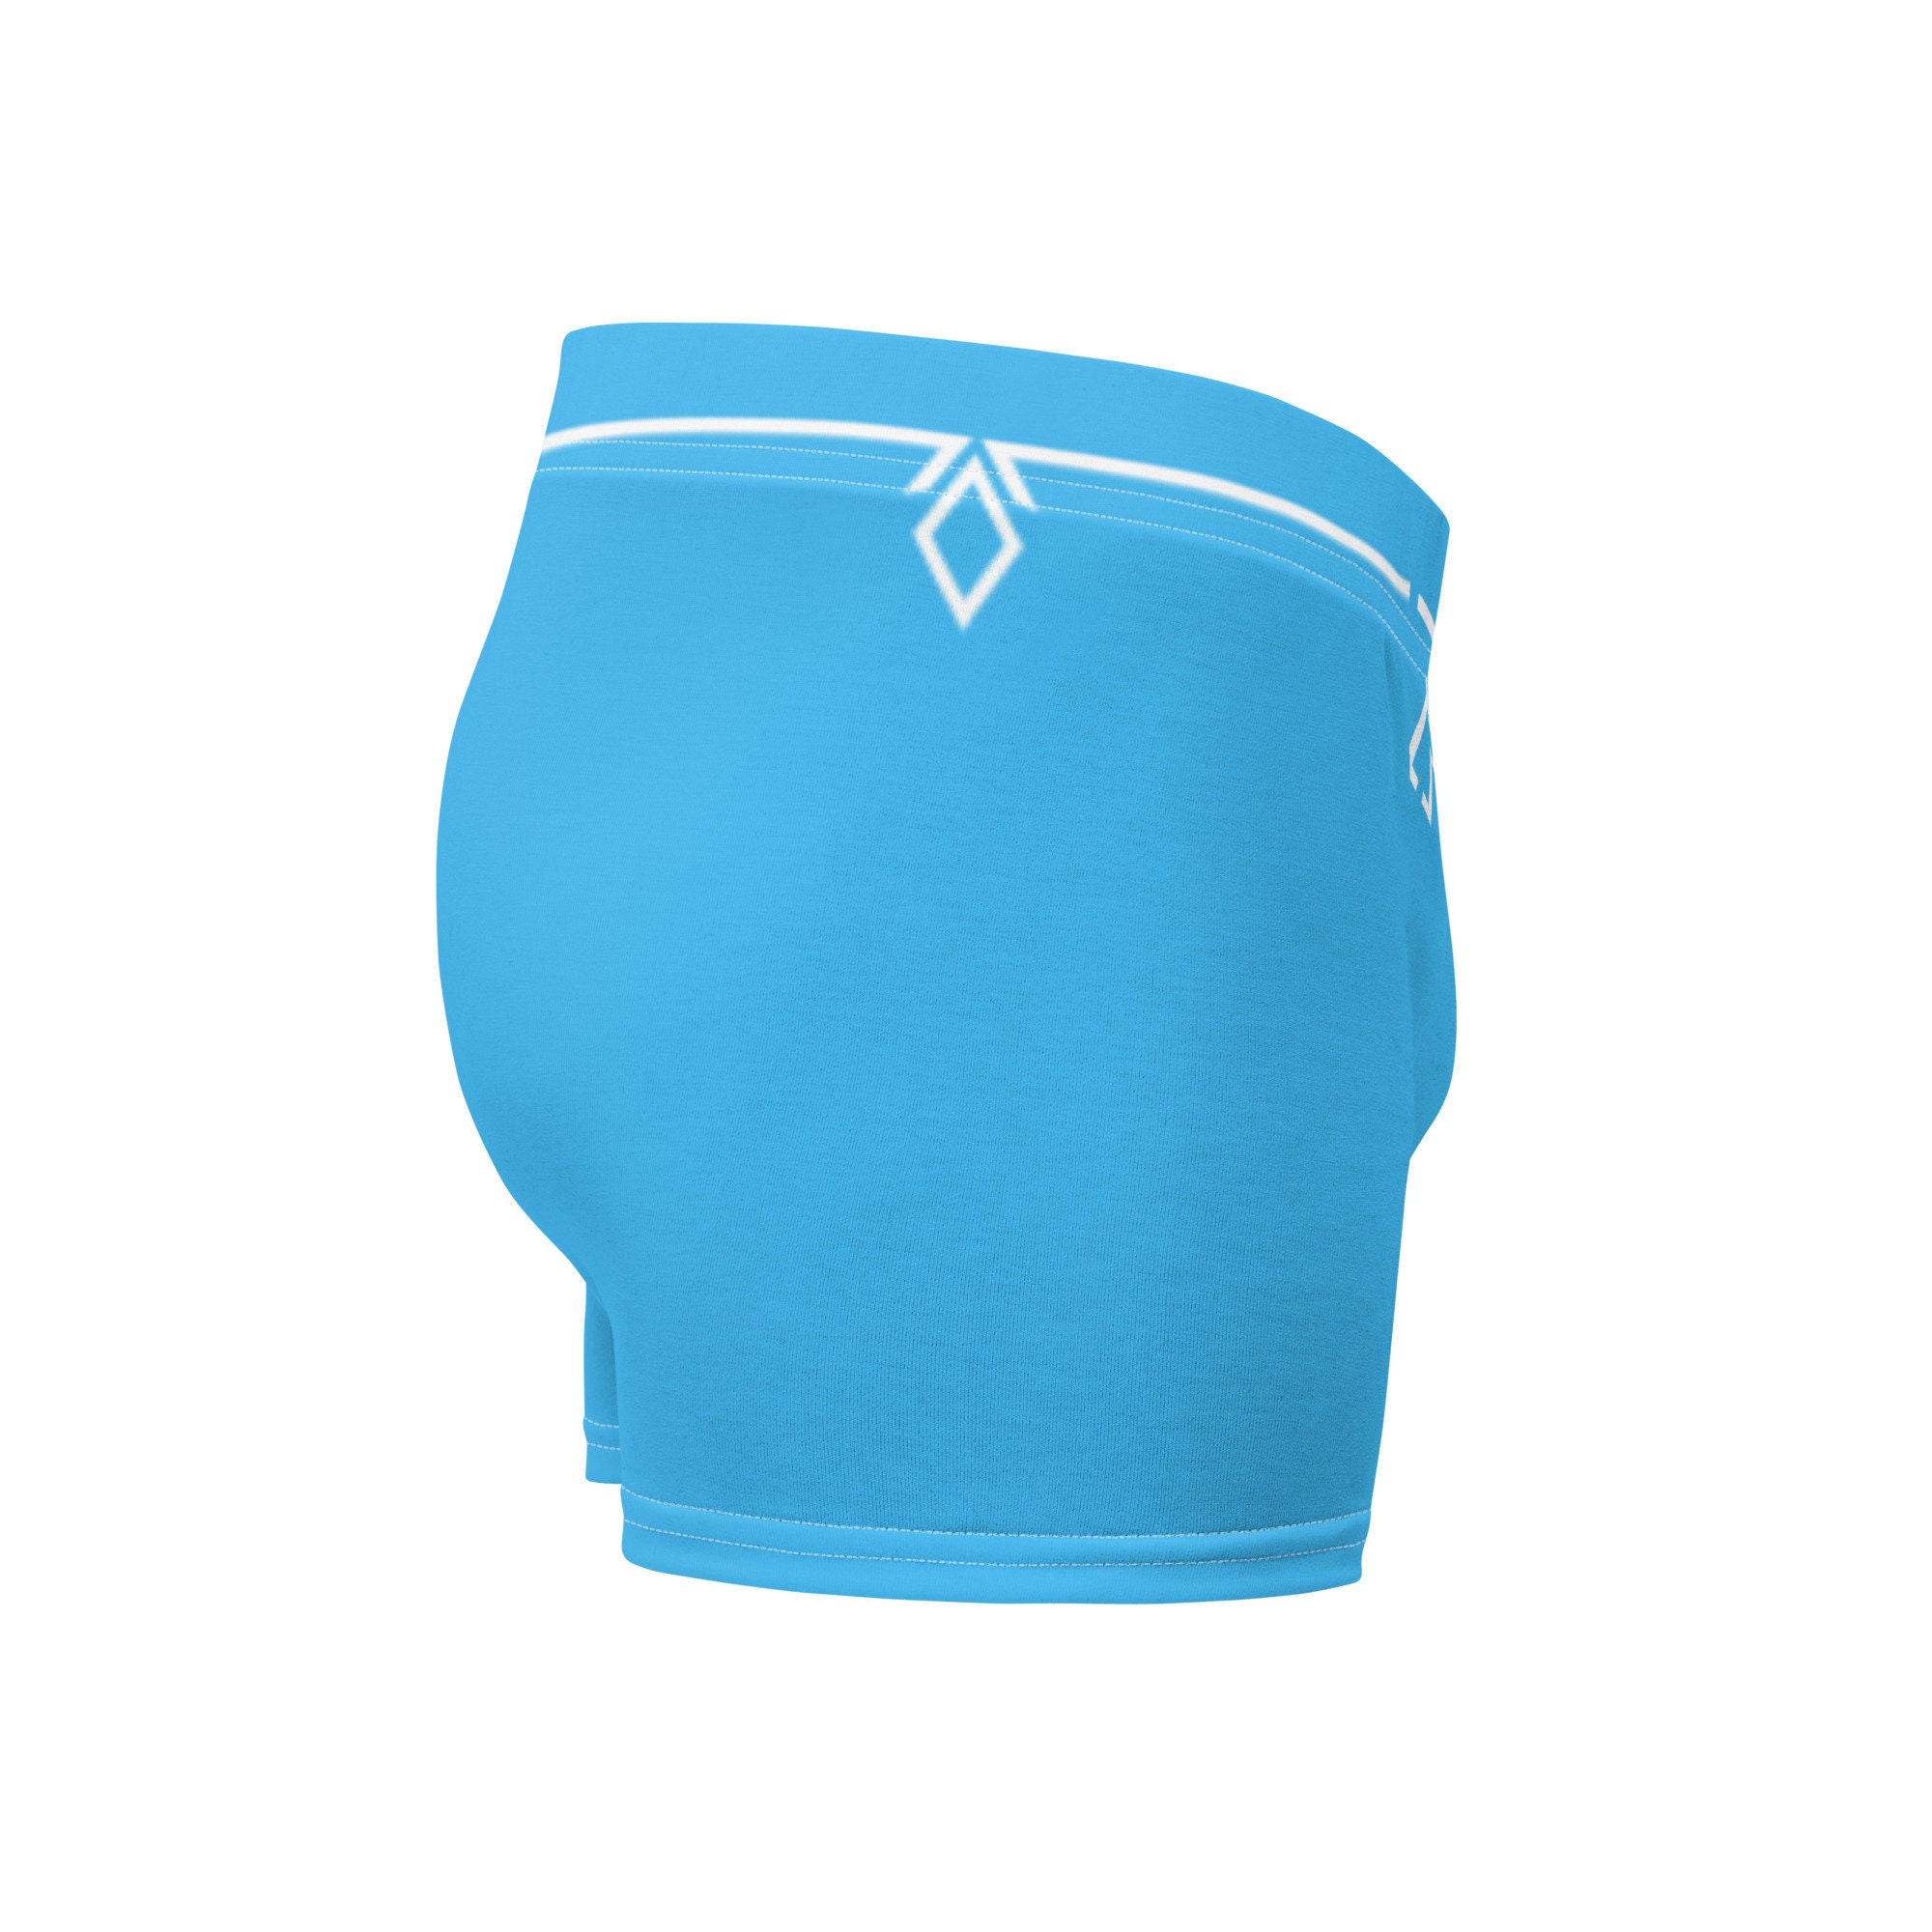 Short Underwear for Muscular Link + 33 Colors [The Legend of Zelda